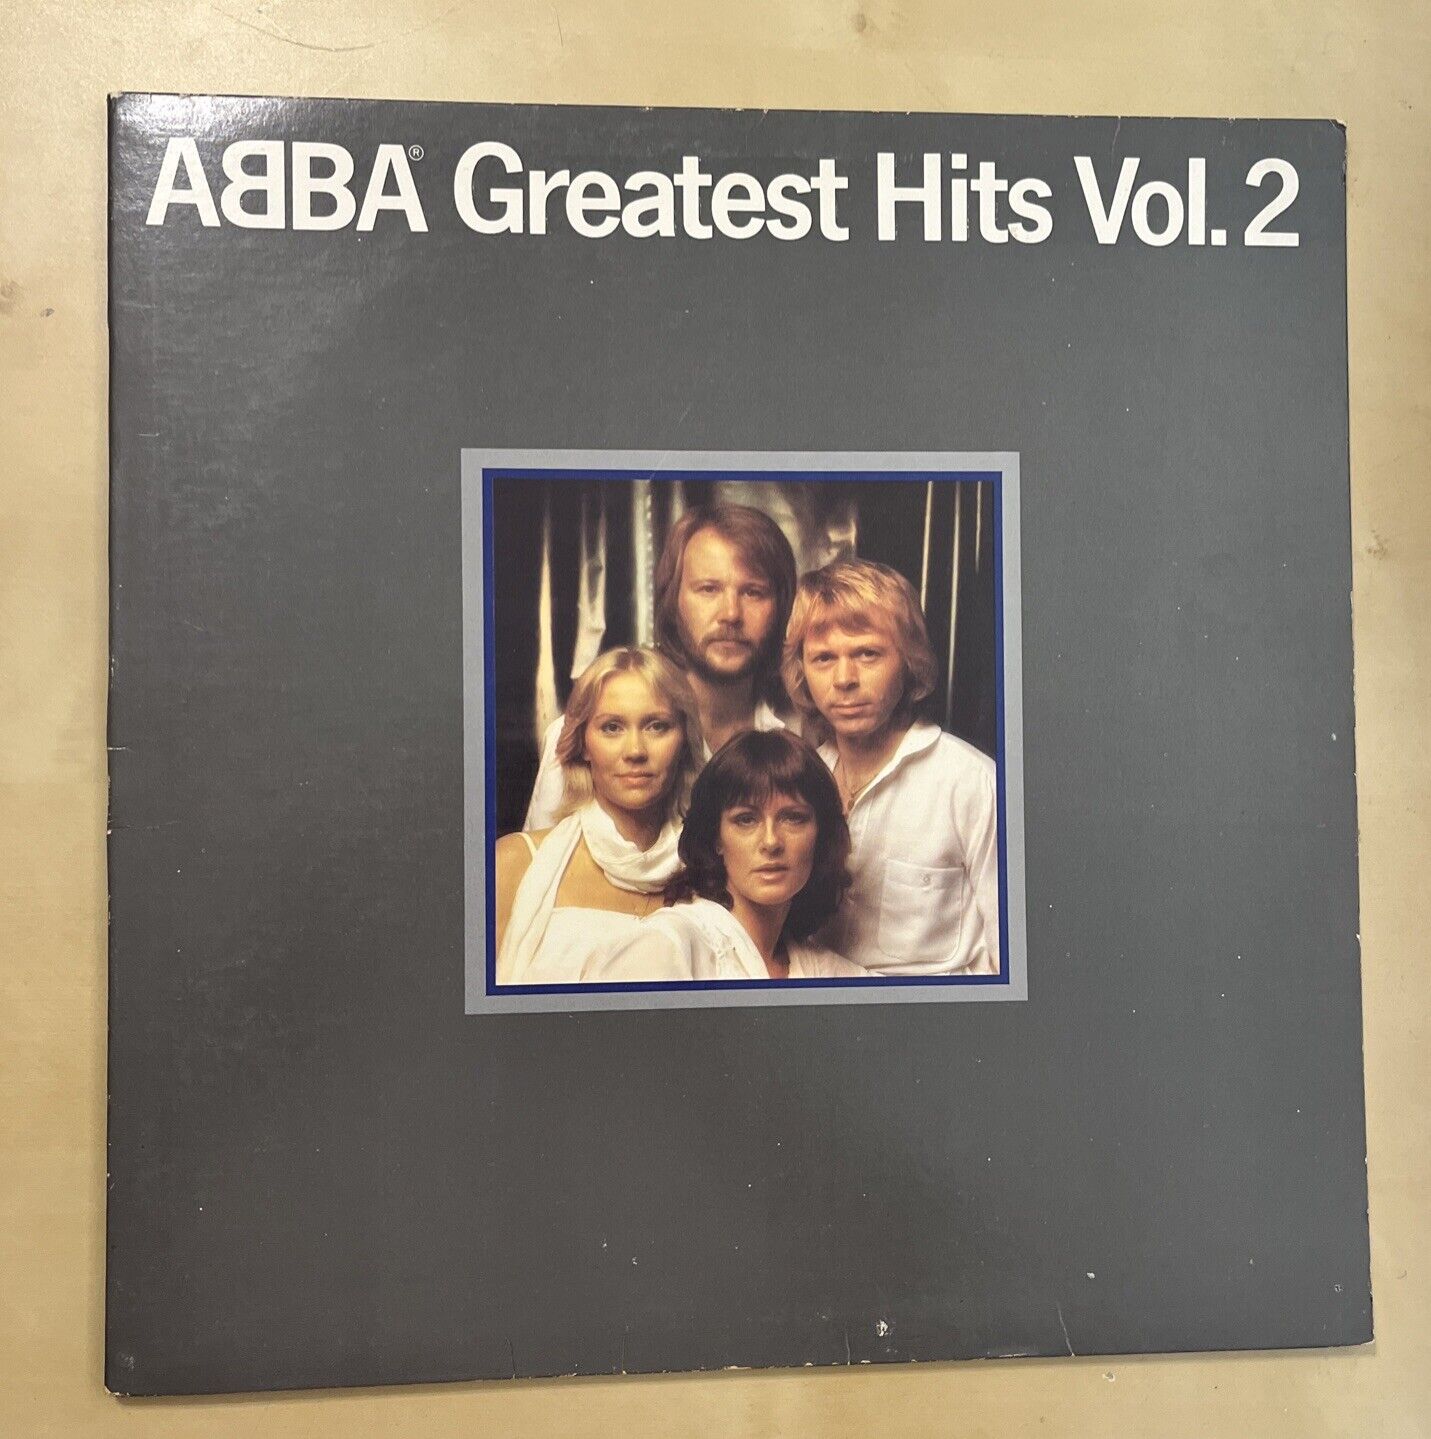 ABBA Greatest Hit Vol 2 - Atlantic Records - Gatefold Vinyl Record SD 16009 VTG